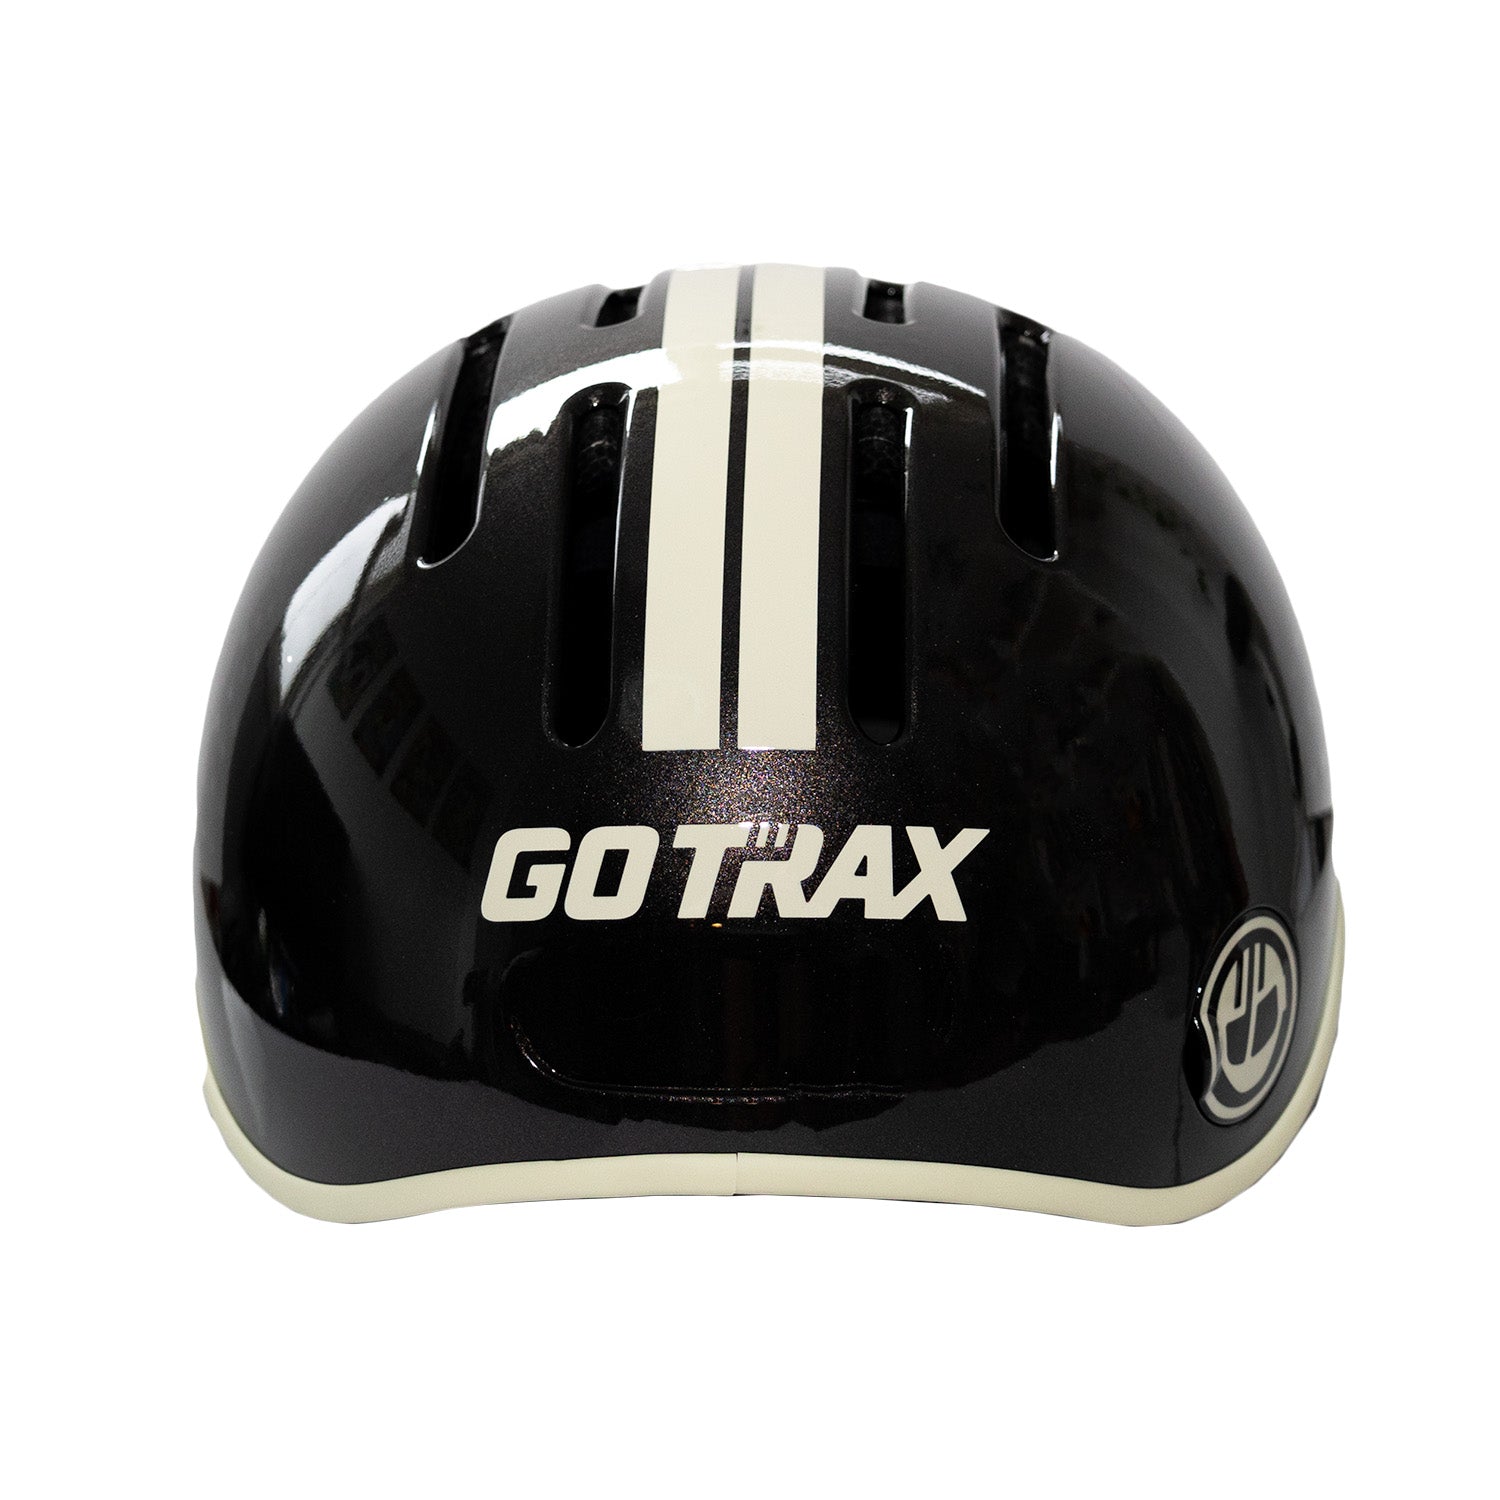 Free thousand Heritage Helmet - GOTRAX